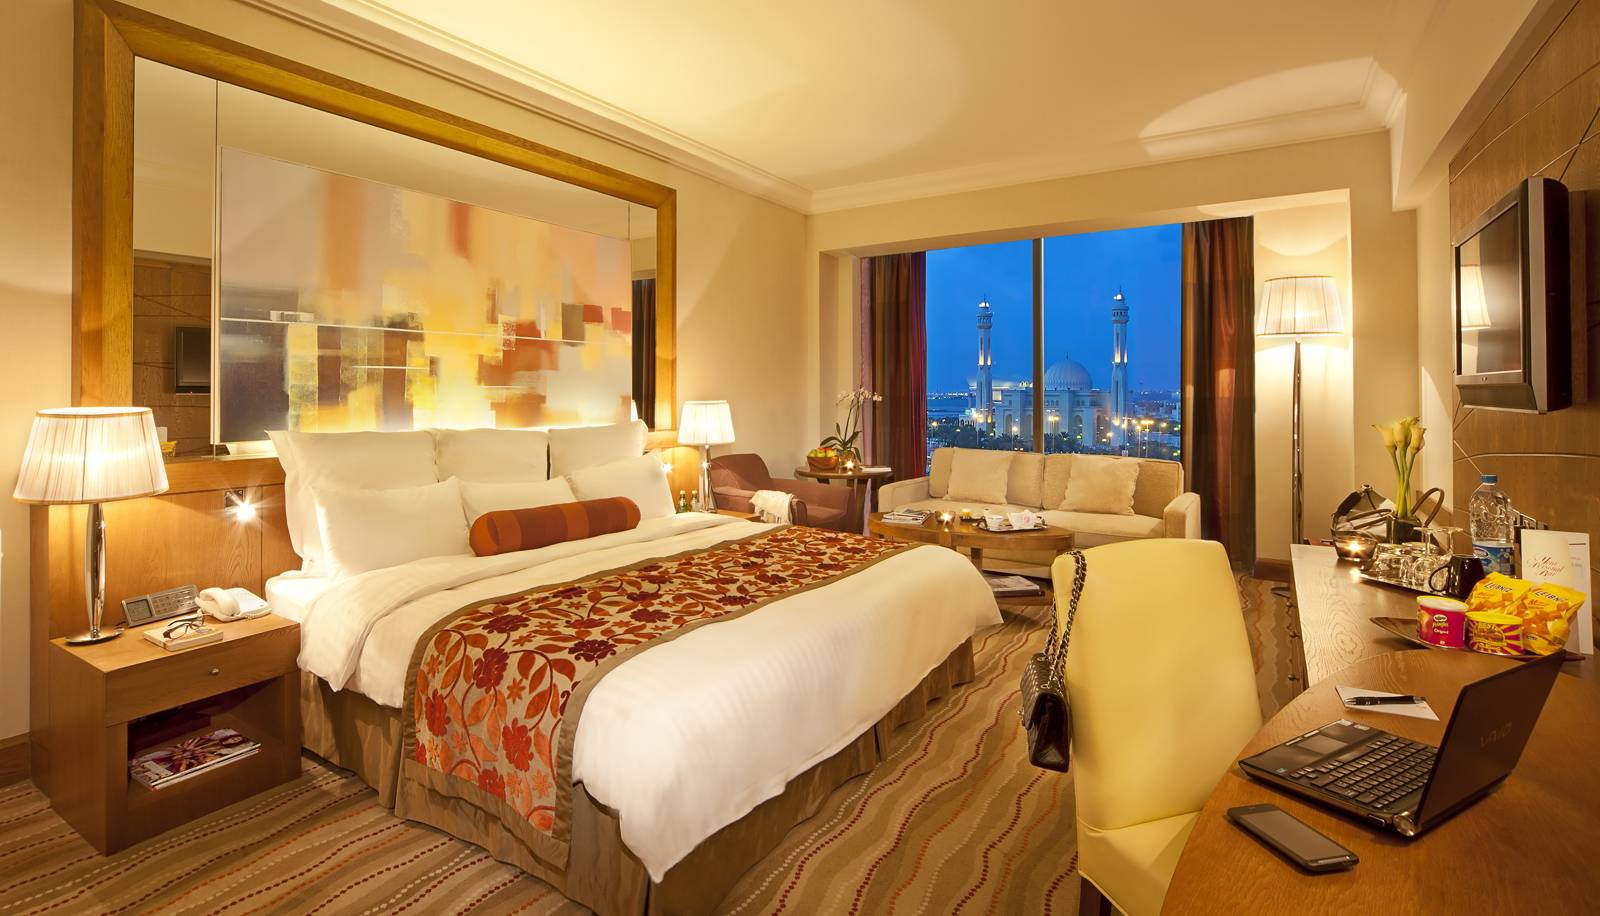 Hotel Rooms to Inspire Your Bedroom Design